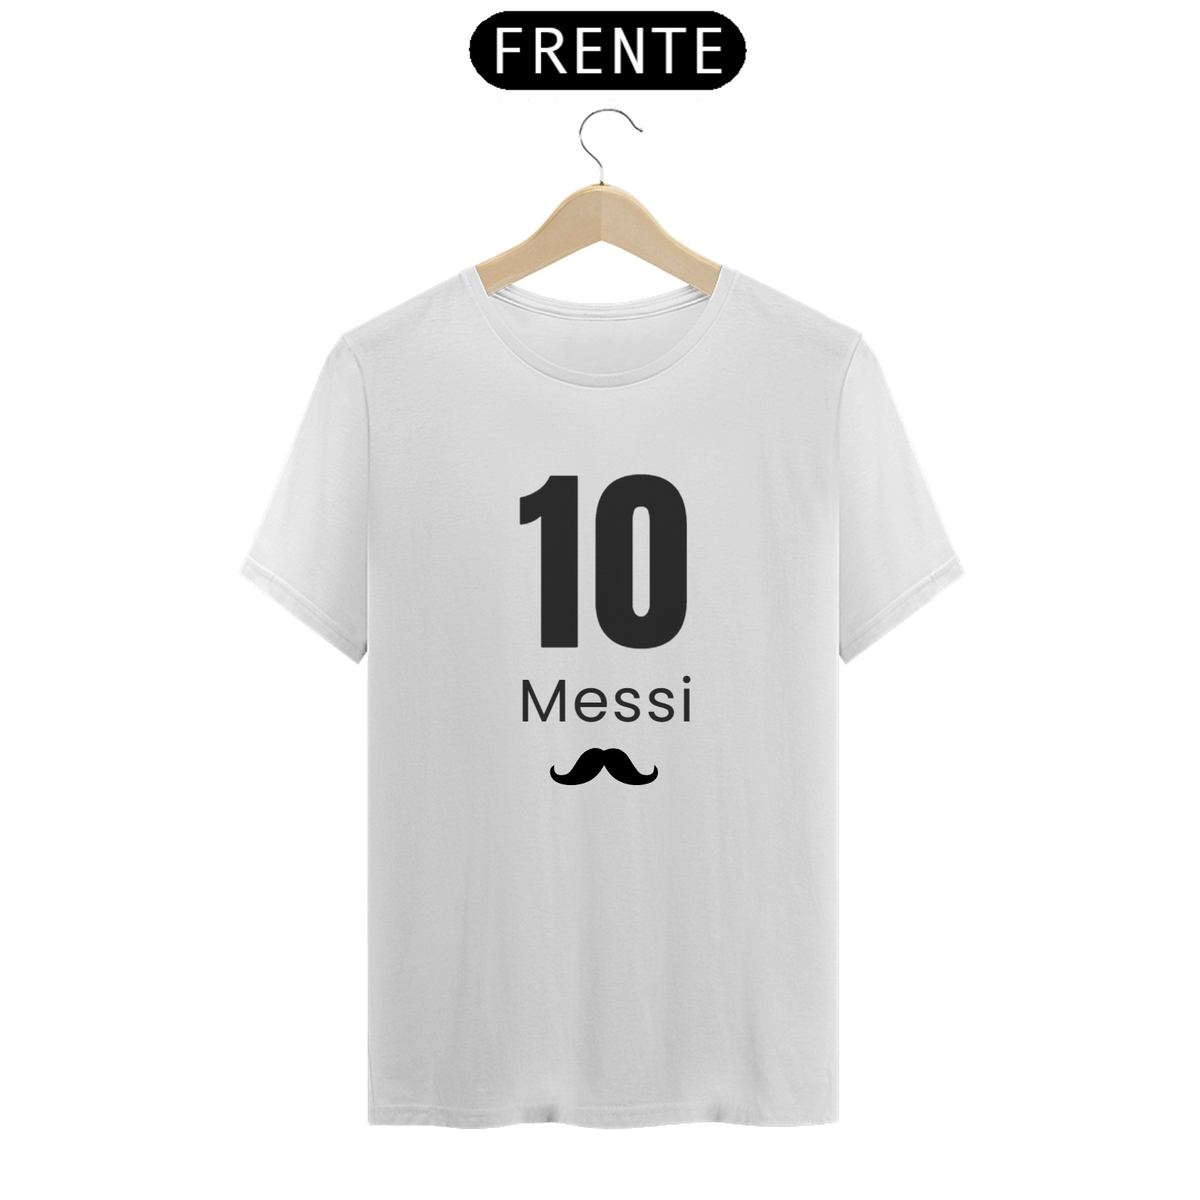 Nome do produto: Camiseta Classica Messi